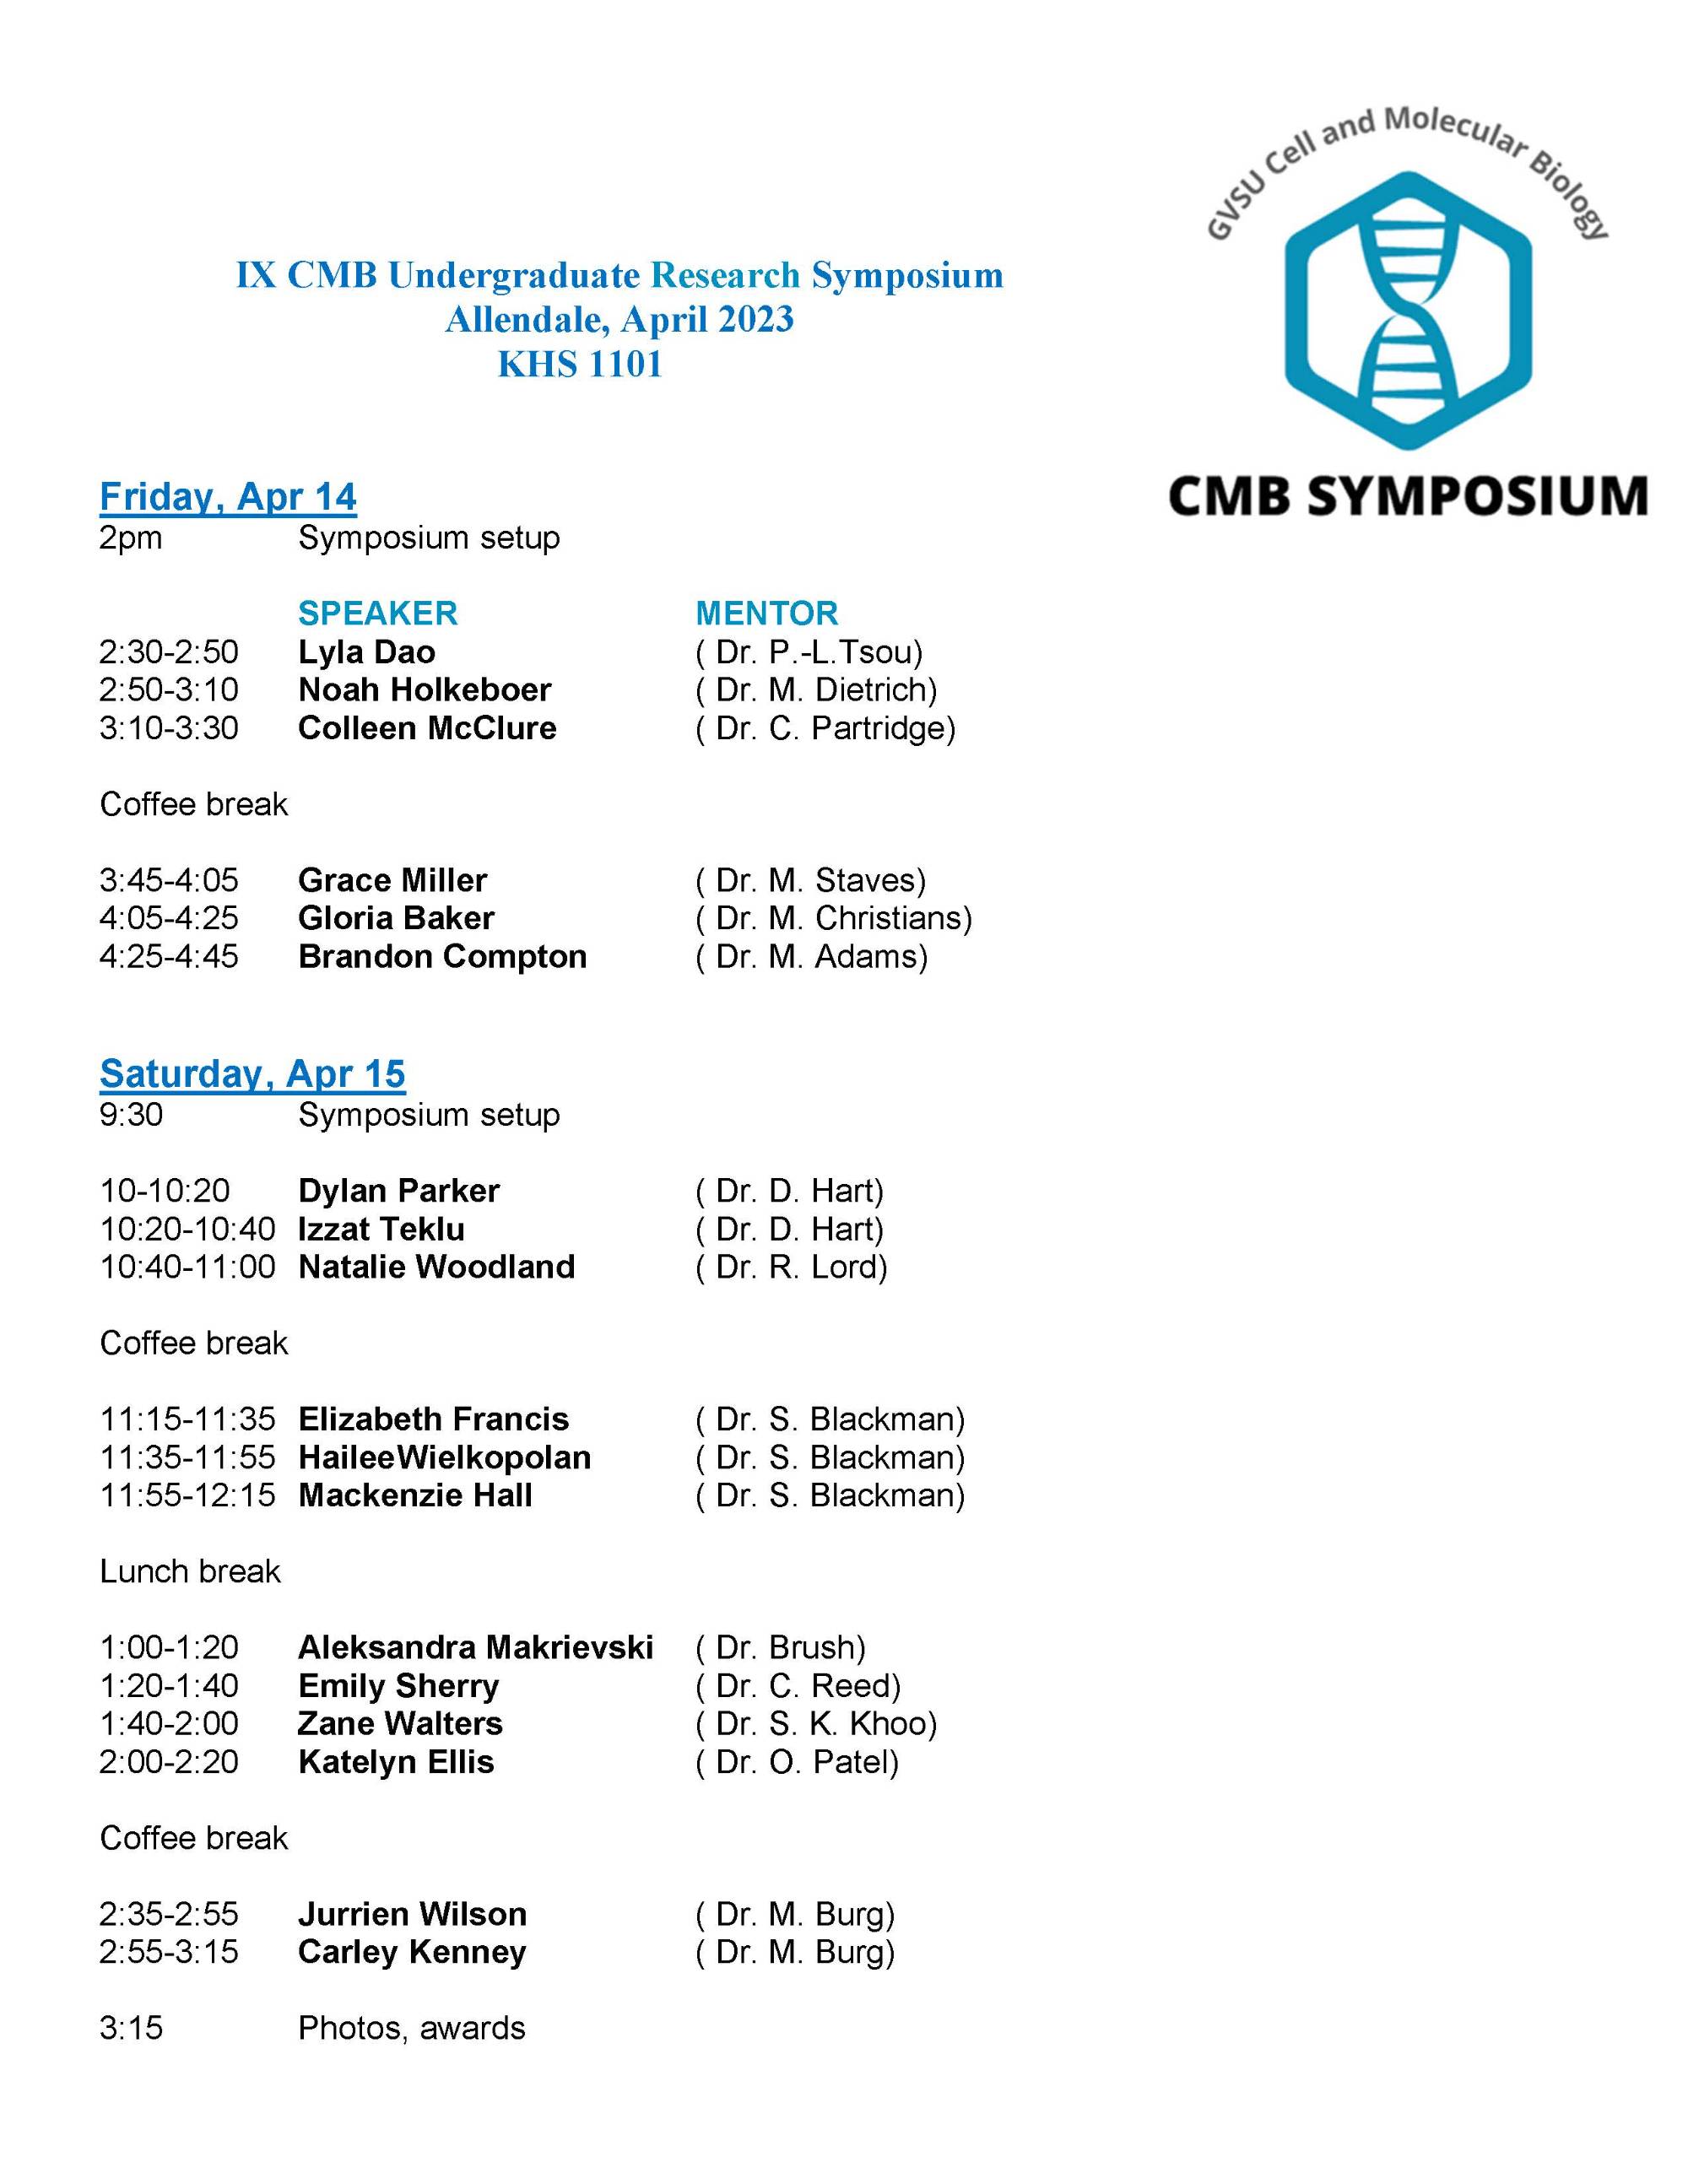 CMB Undergraduate Research Symposium Schedule